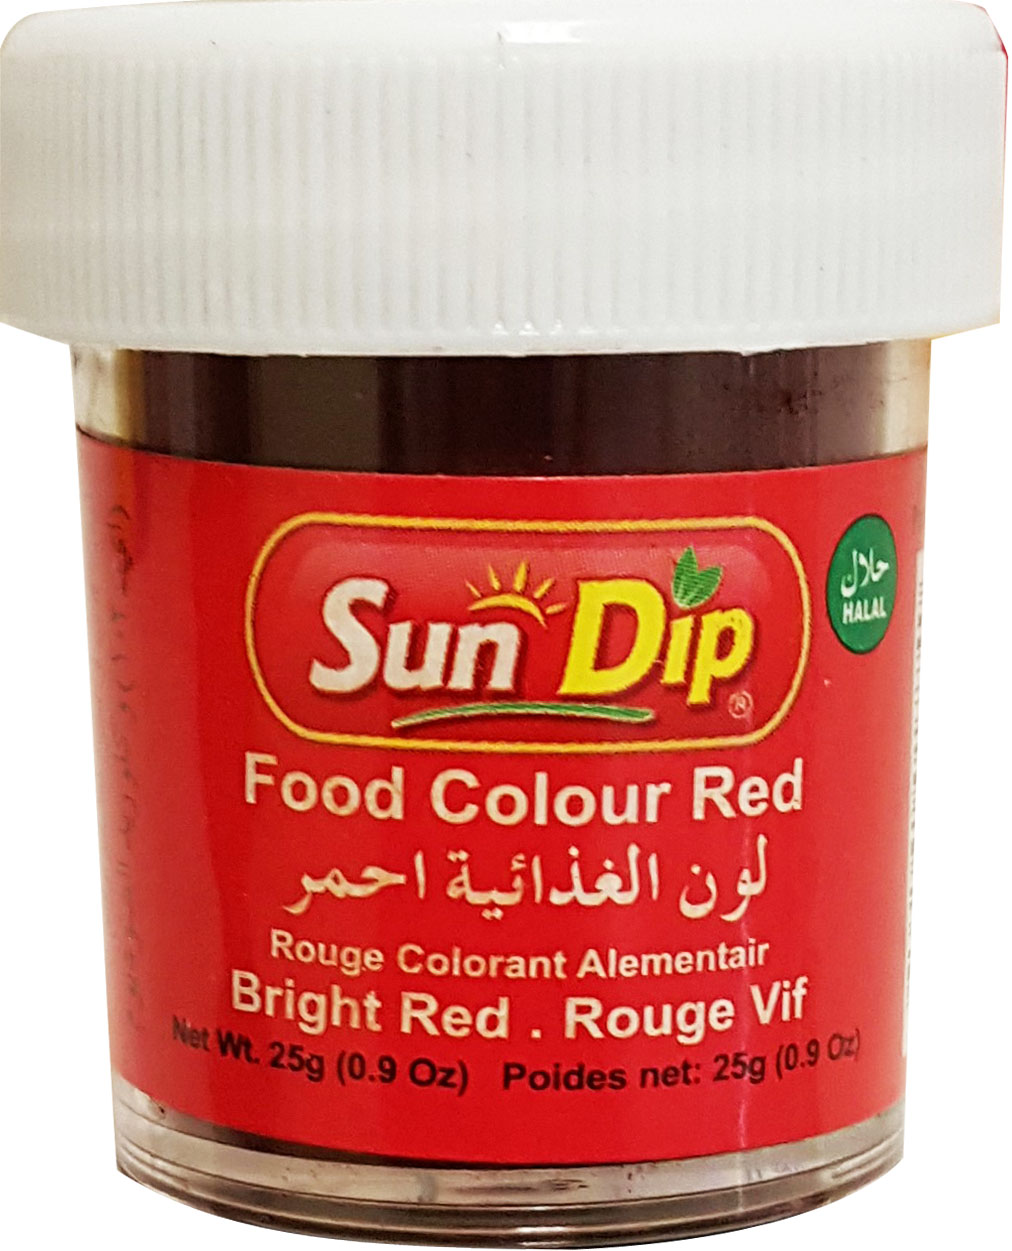 Sundip Food Colour Red